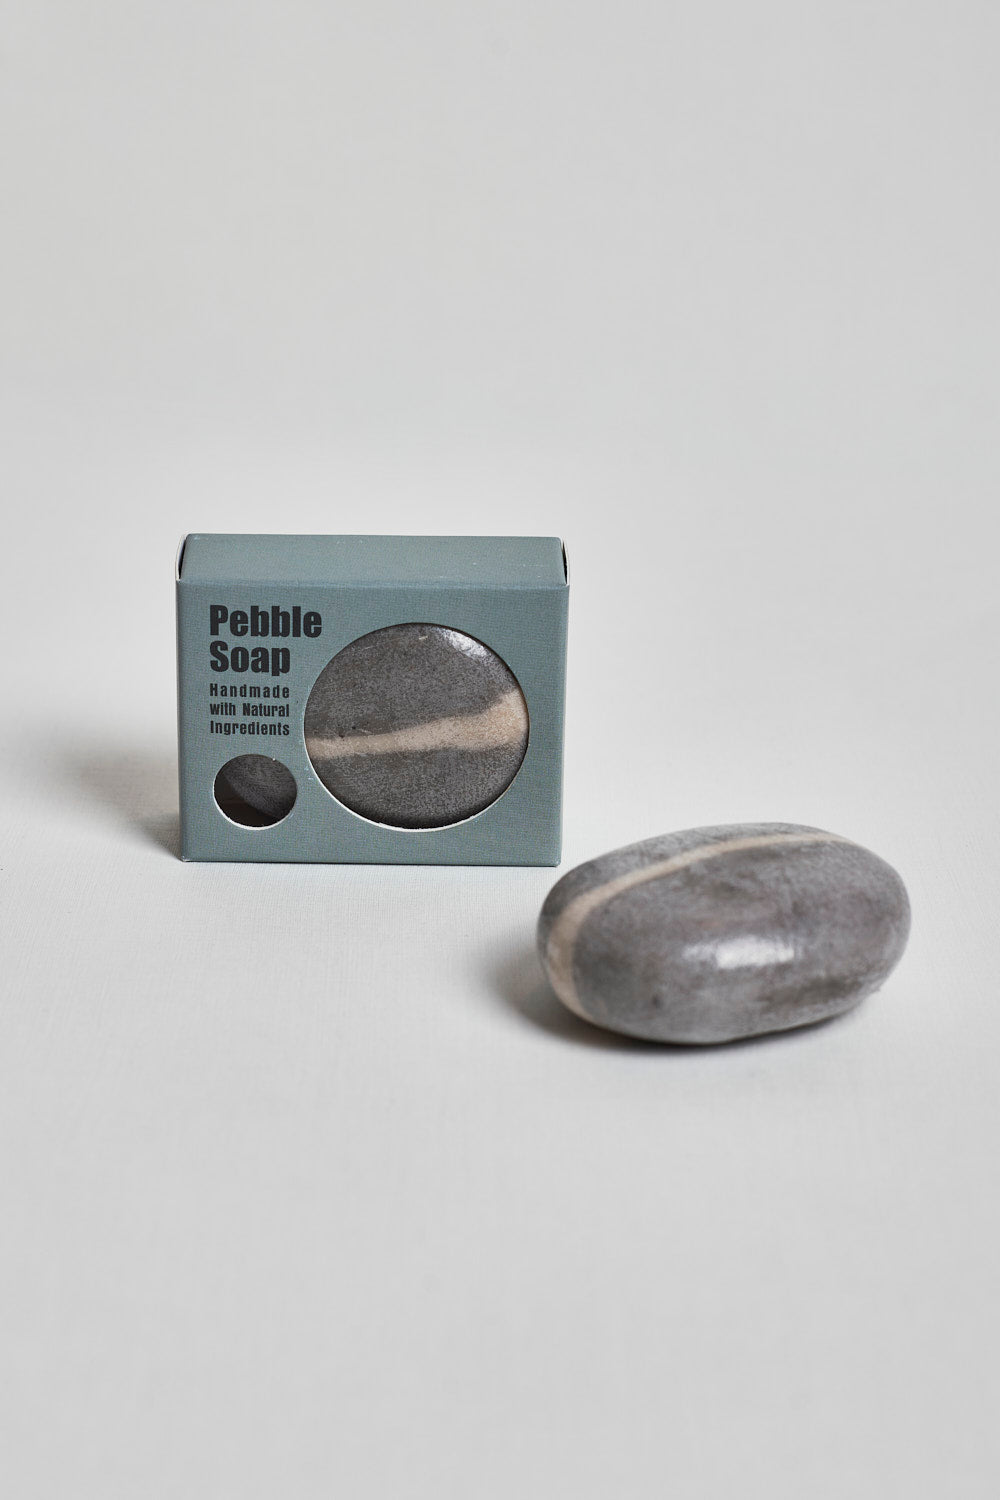 Natural Handmade Pebble Soaps